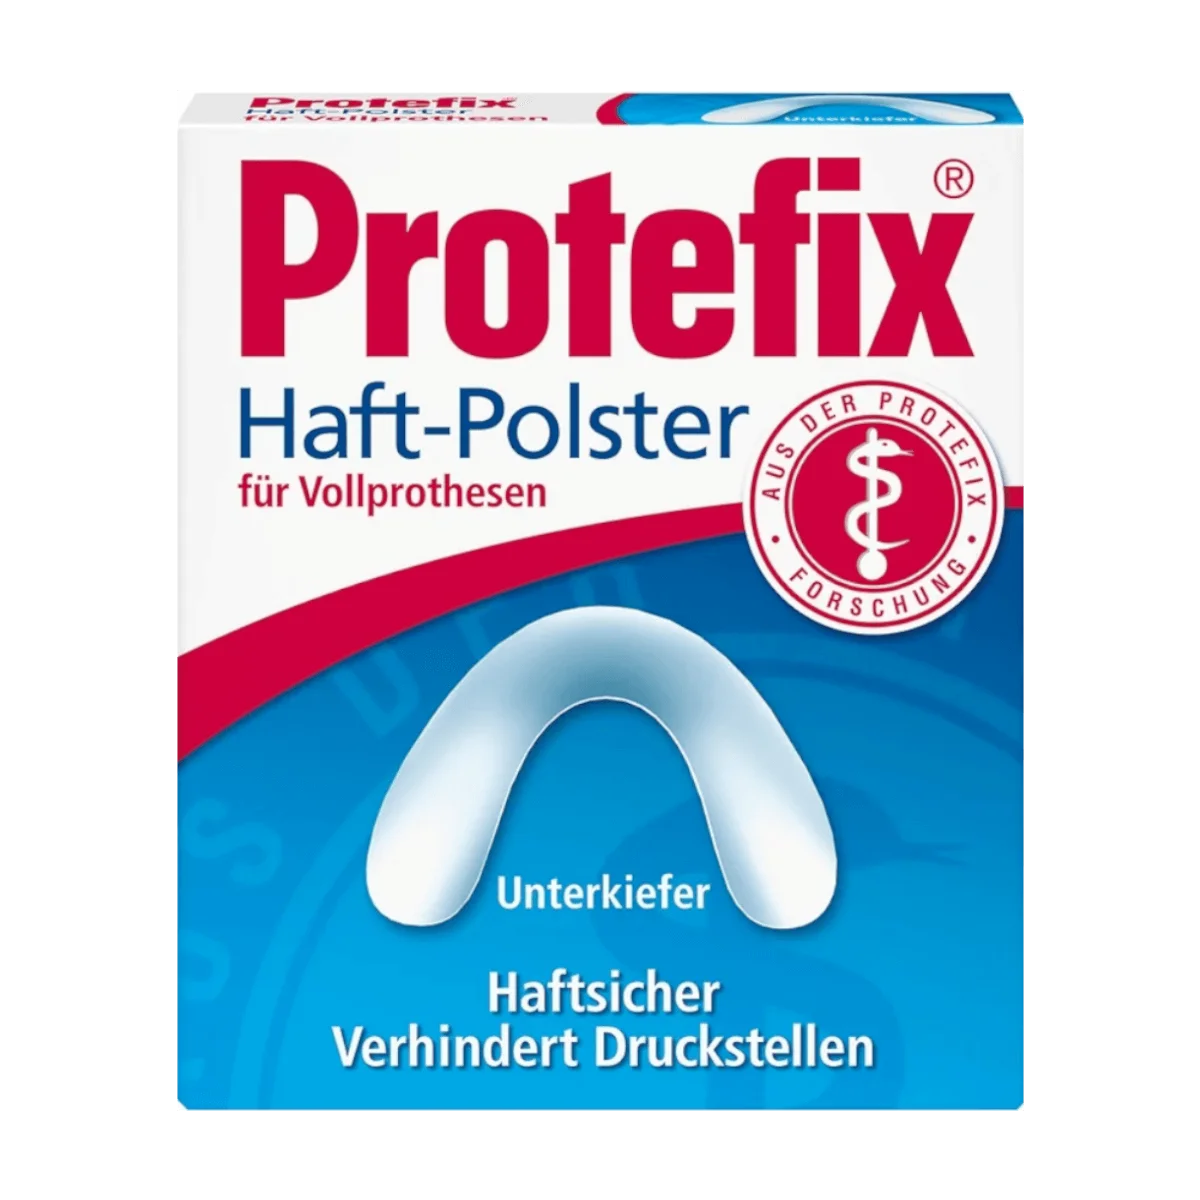 Protefix Haft-Polster fuer Unterkiefer, 30 Stk